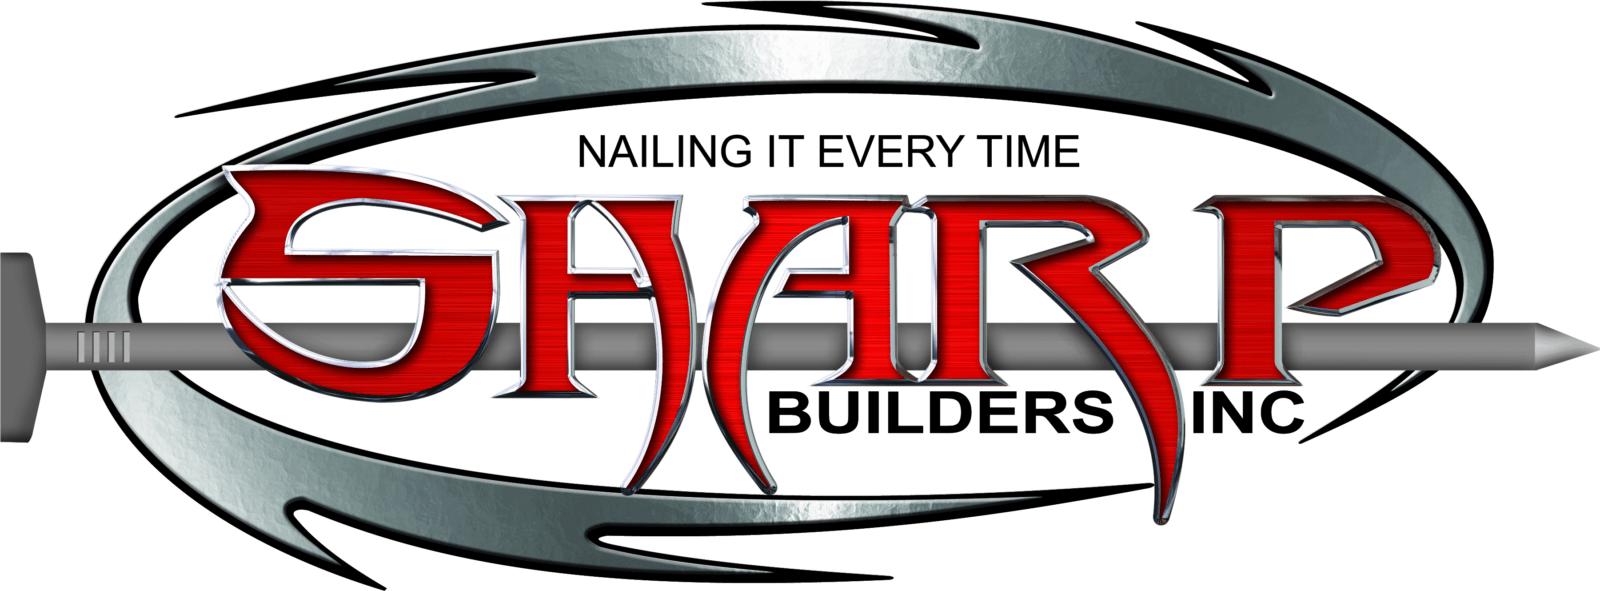 Sharp Builders, Inc logo